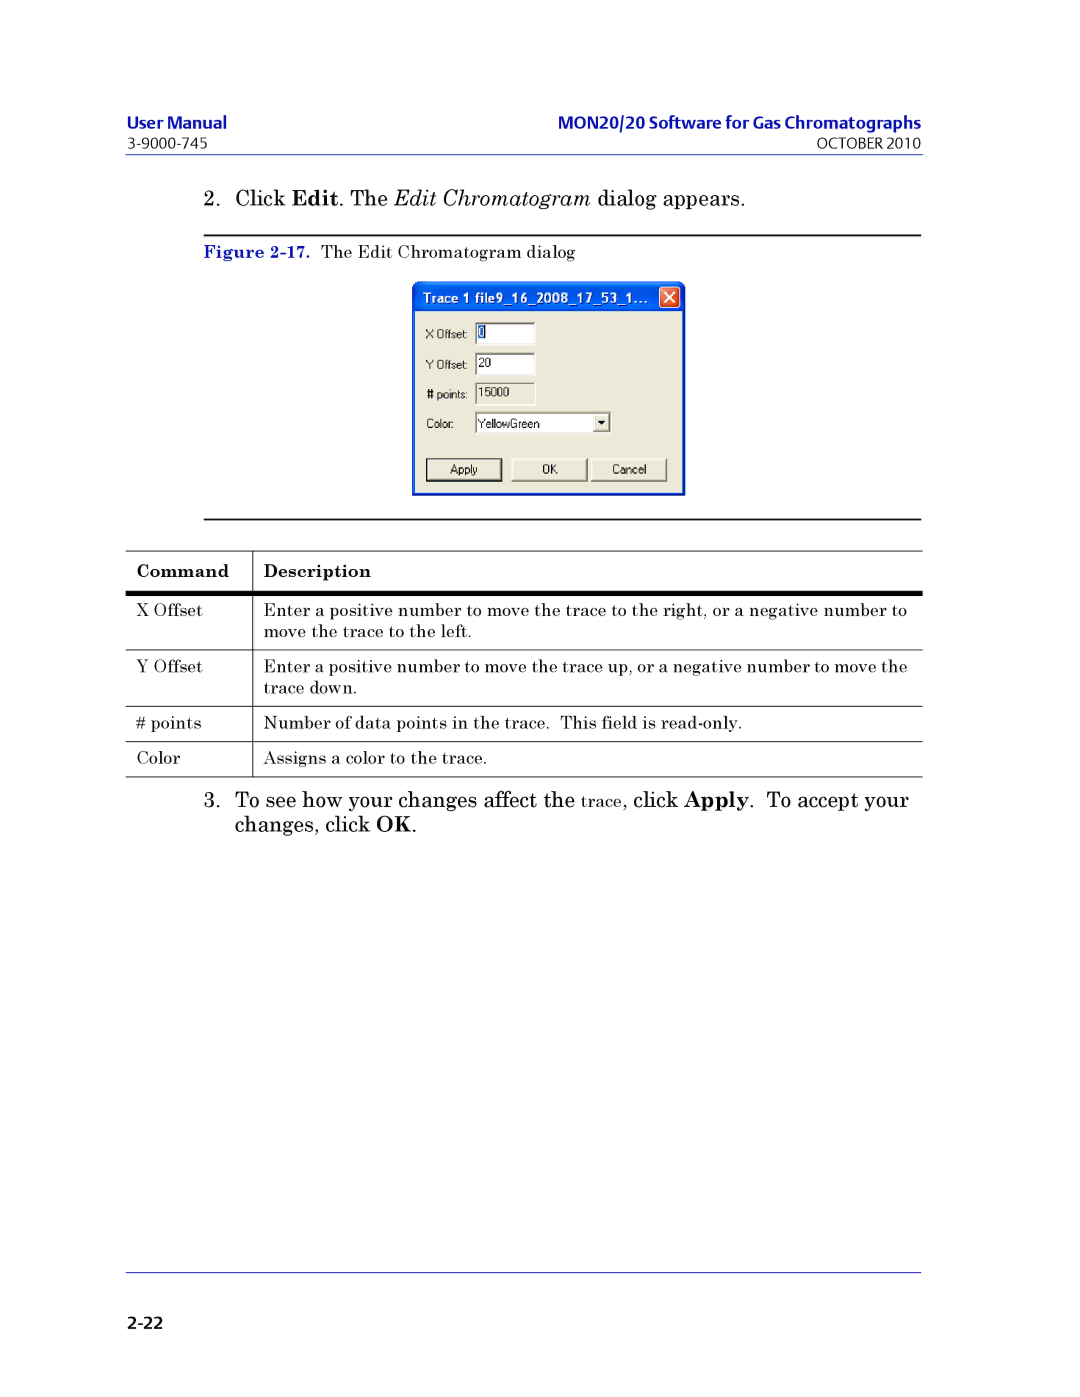 Emerson Process Management 3-9000-745 manual Click Edit. The Edit Chromatogram dialog appears 